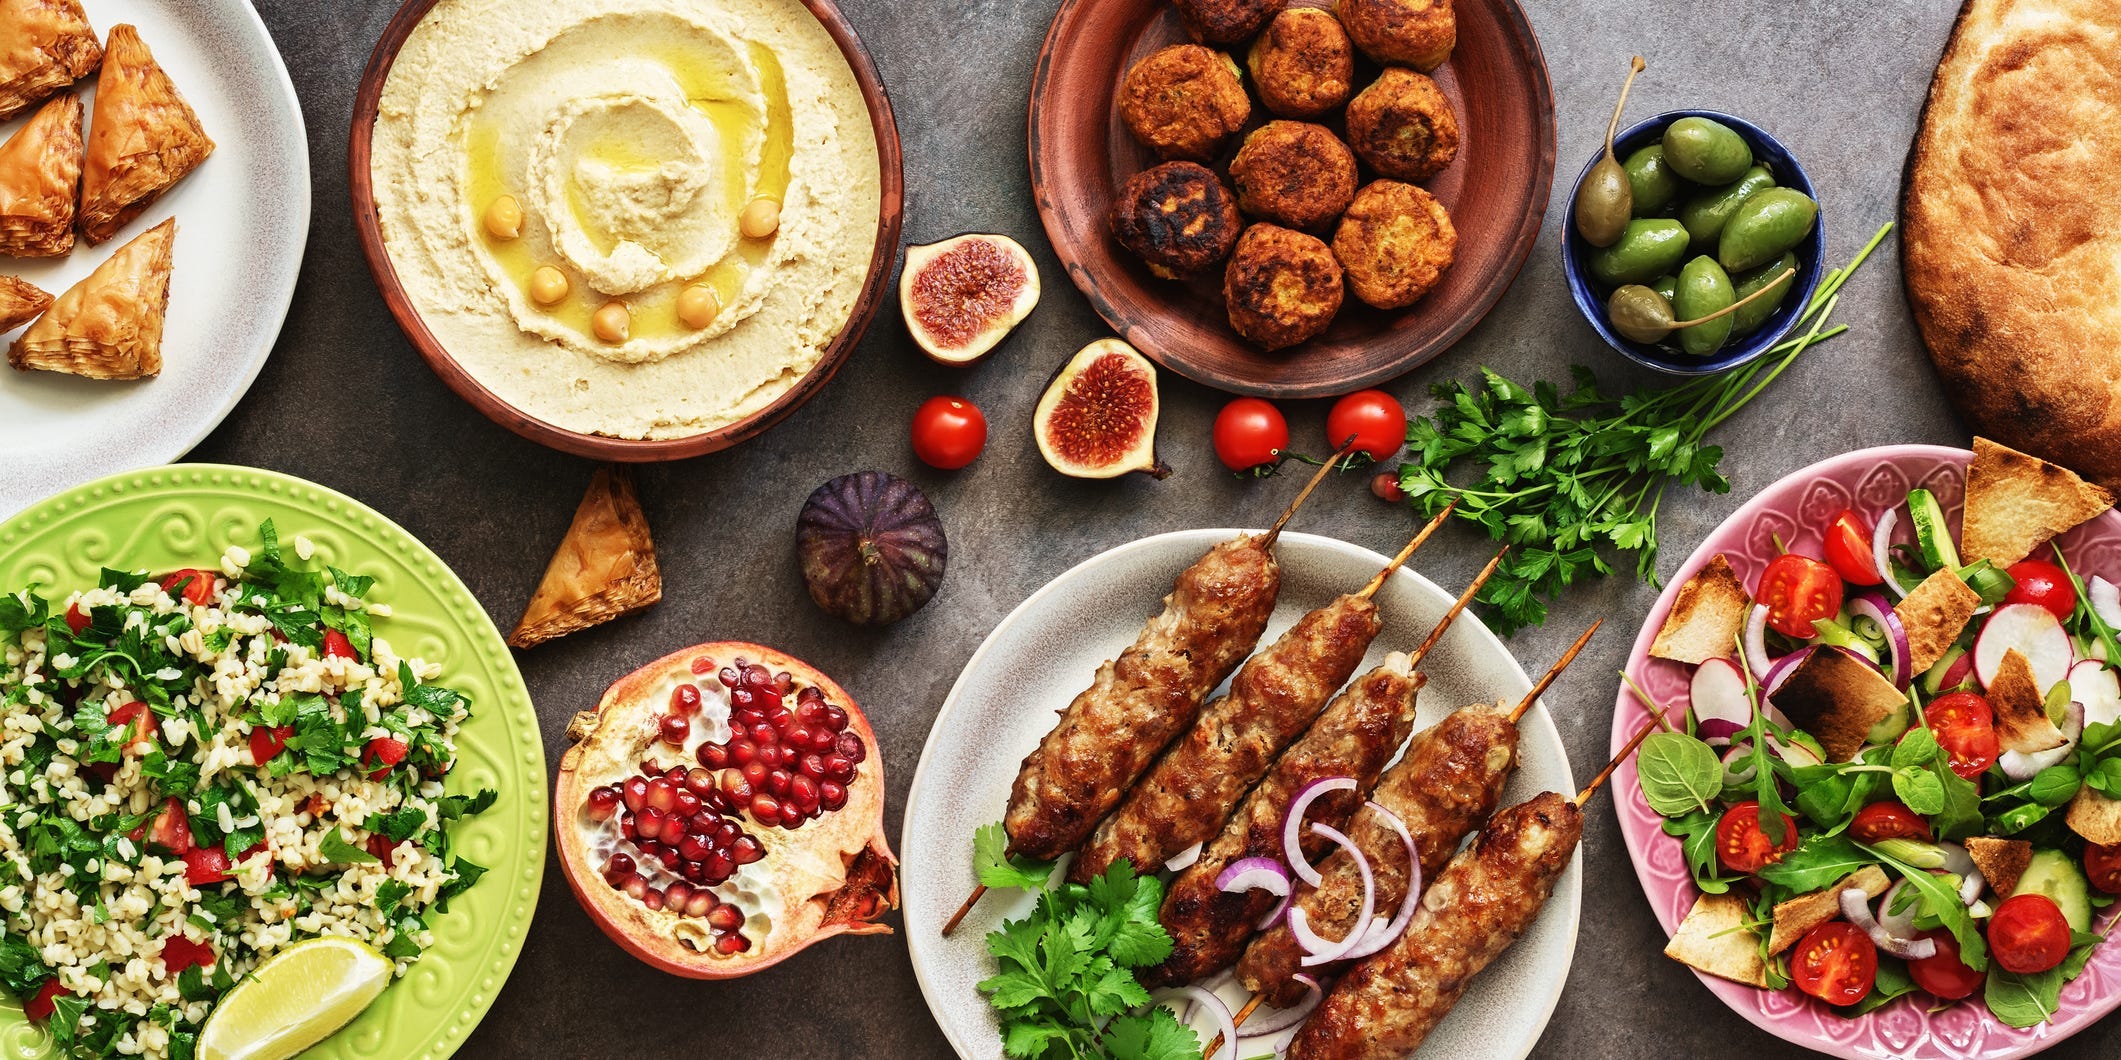 Various plates of Mediterranean/Middle Eastern food including hummus, falafel, tabbouleh, salad, and baklava.